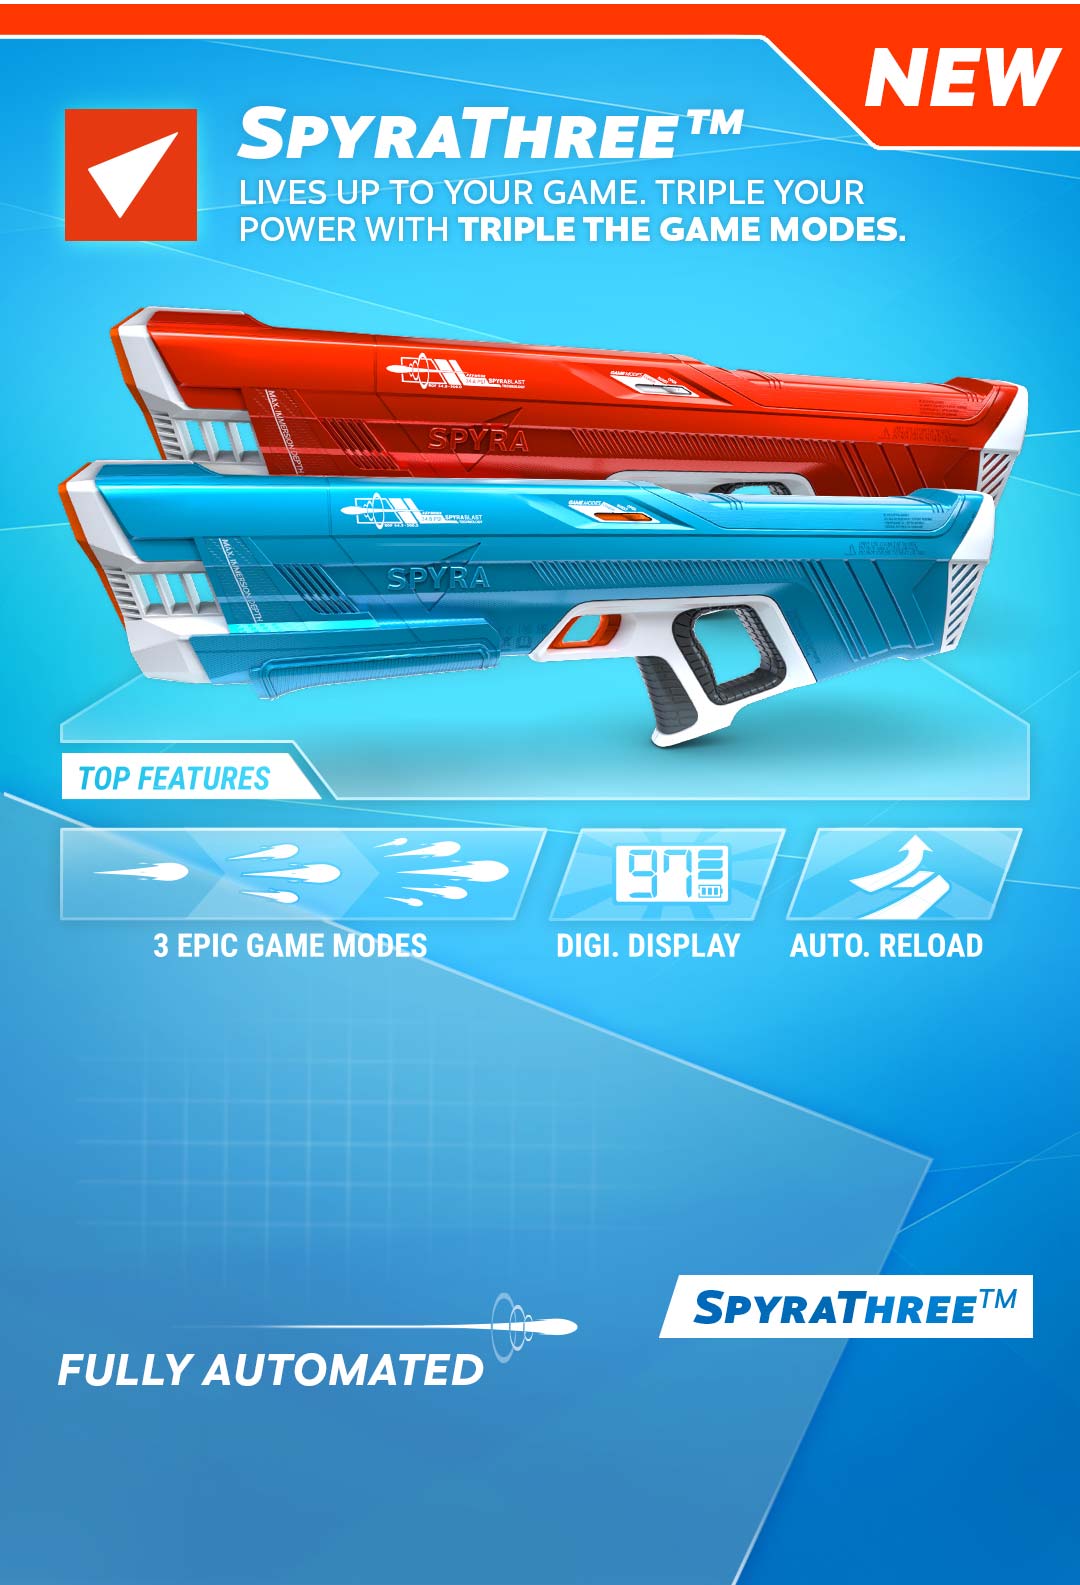 Spyra has a new digital water blaster that looks like it'll blow